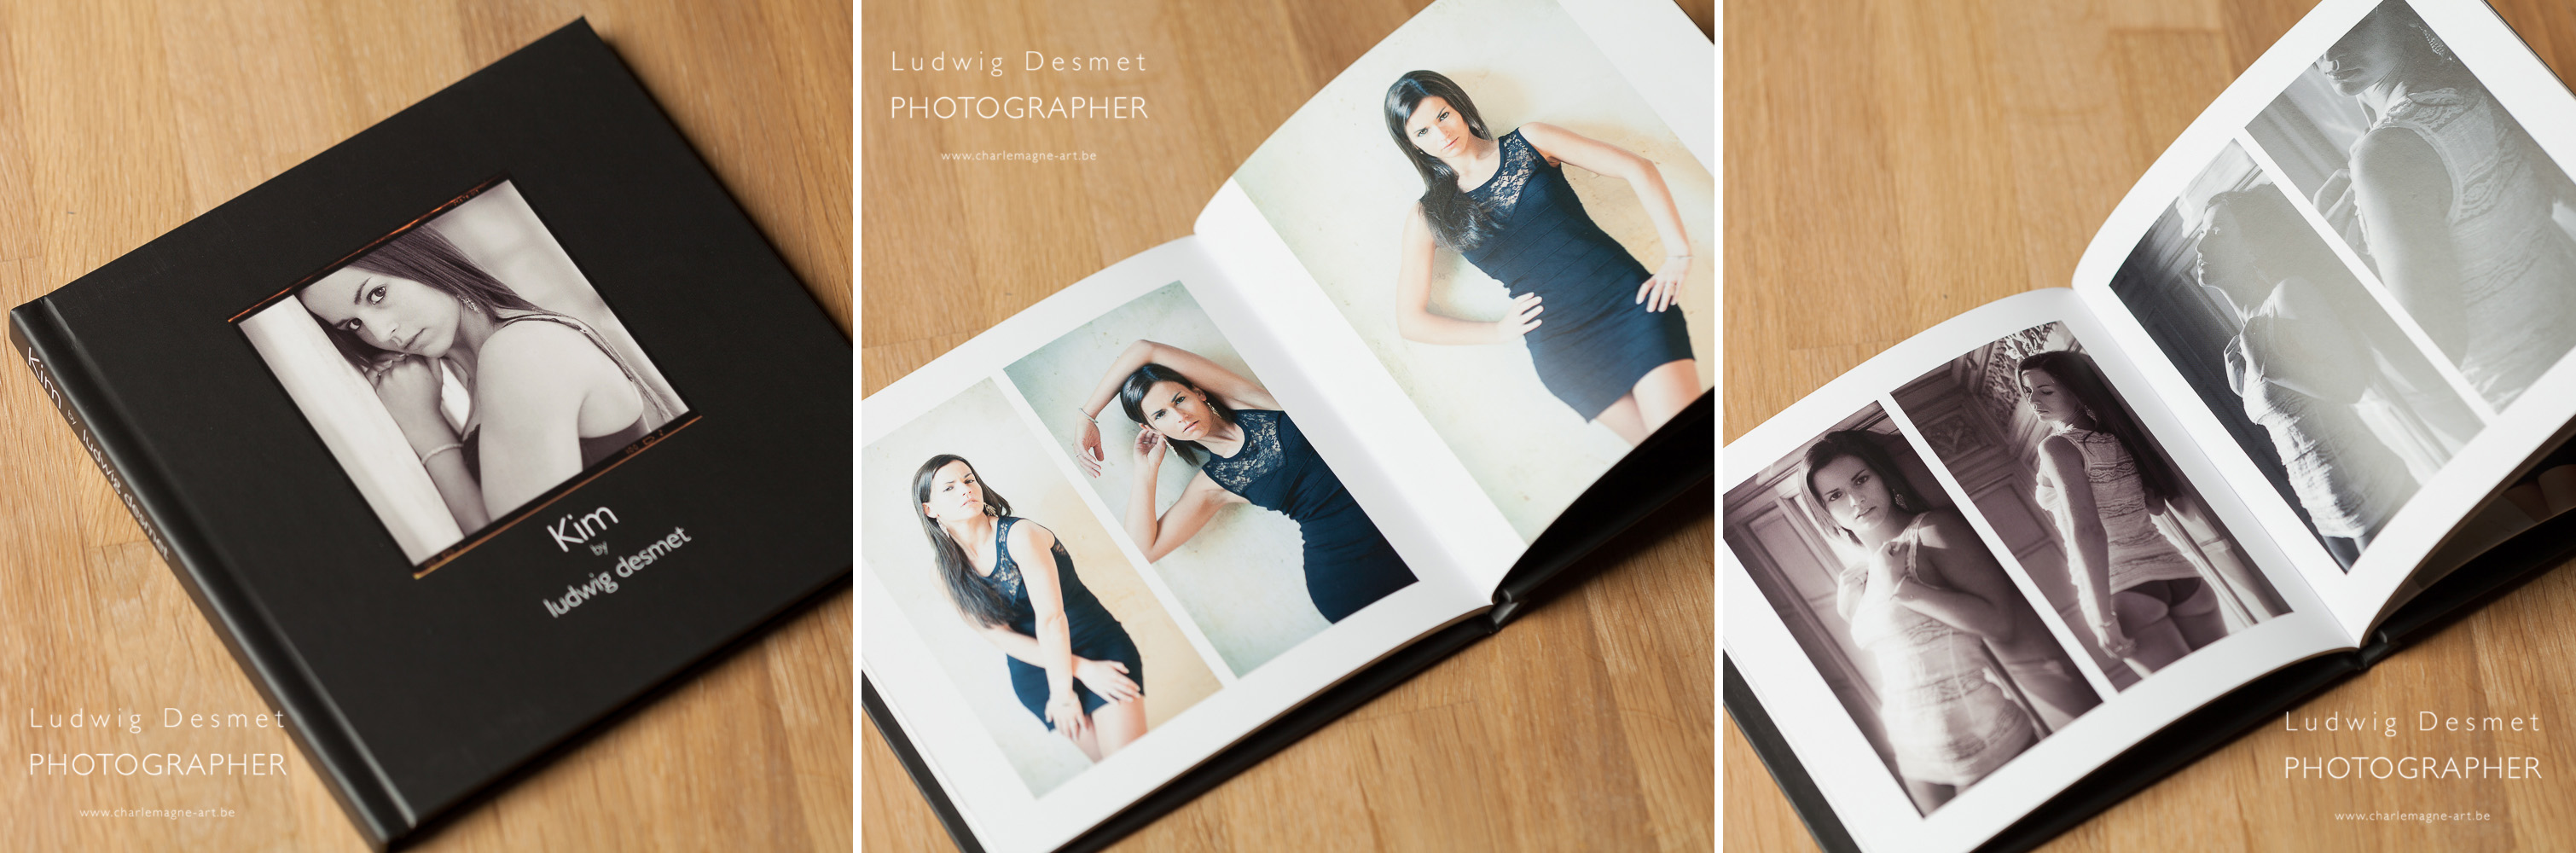 LudwigDesmet_KimT-Pillowbook